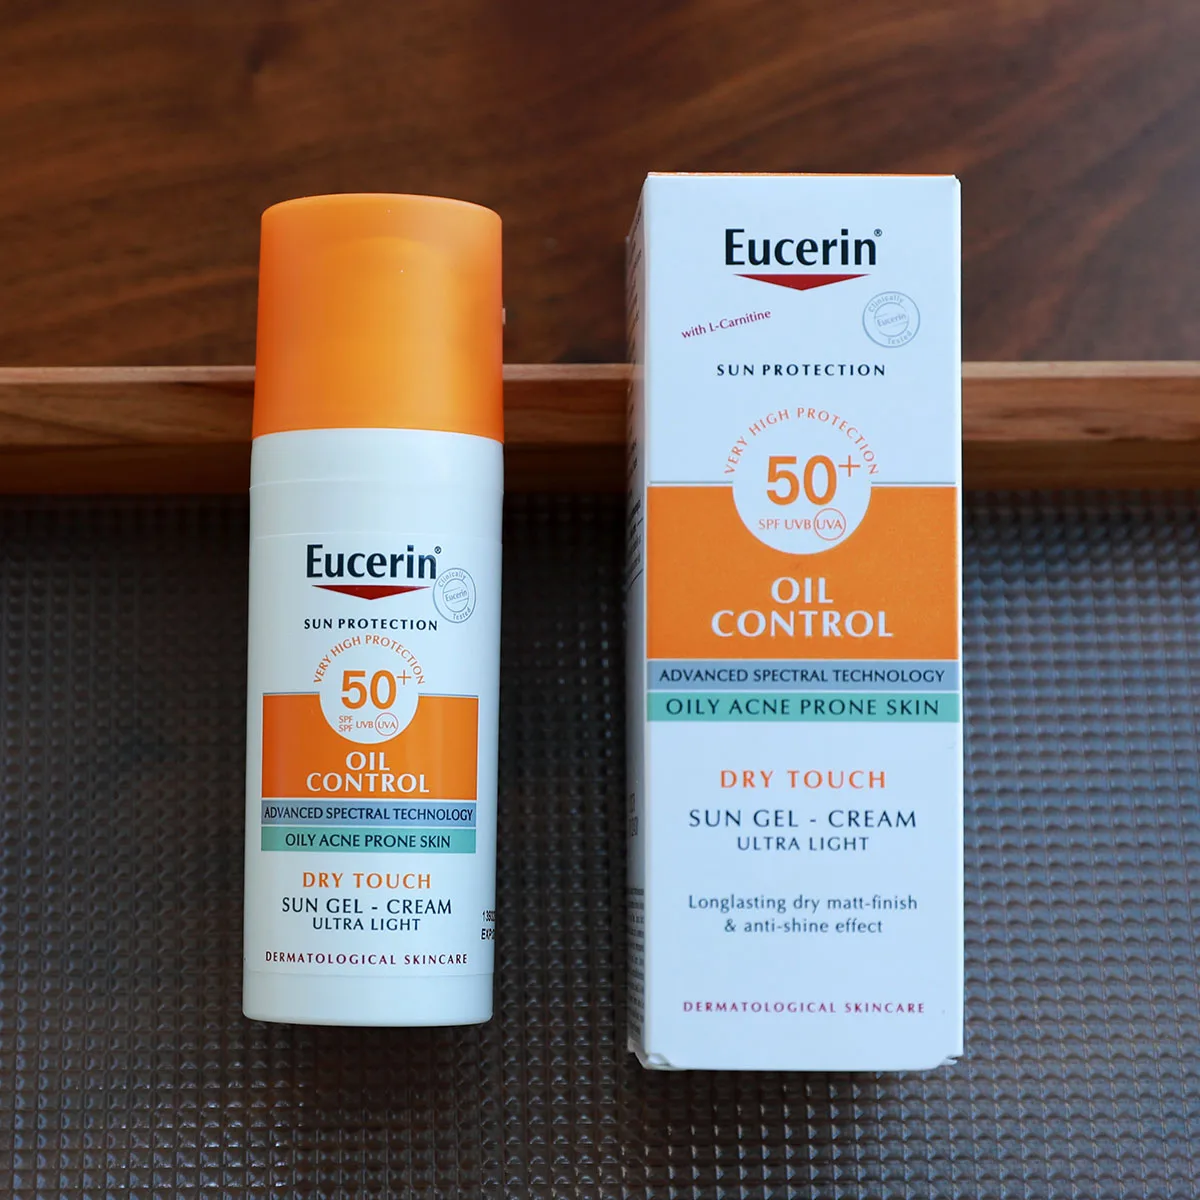 

Original Eucerin Sunscreen Uv Protection Spf 50+ Oil Control Sunblock Sun Gel Face Body Sunscreen Waterproof For Oily Skin 50ml